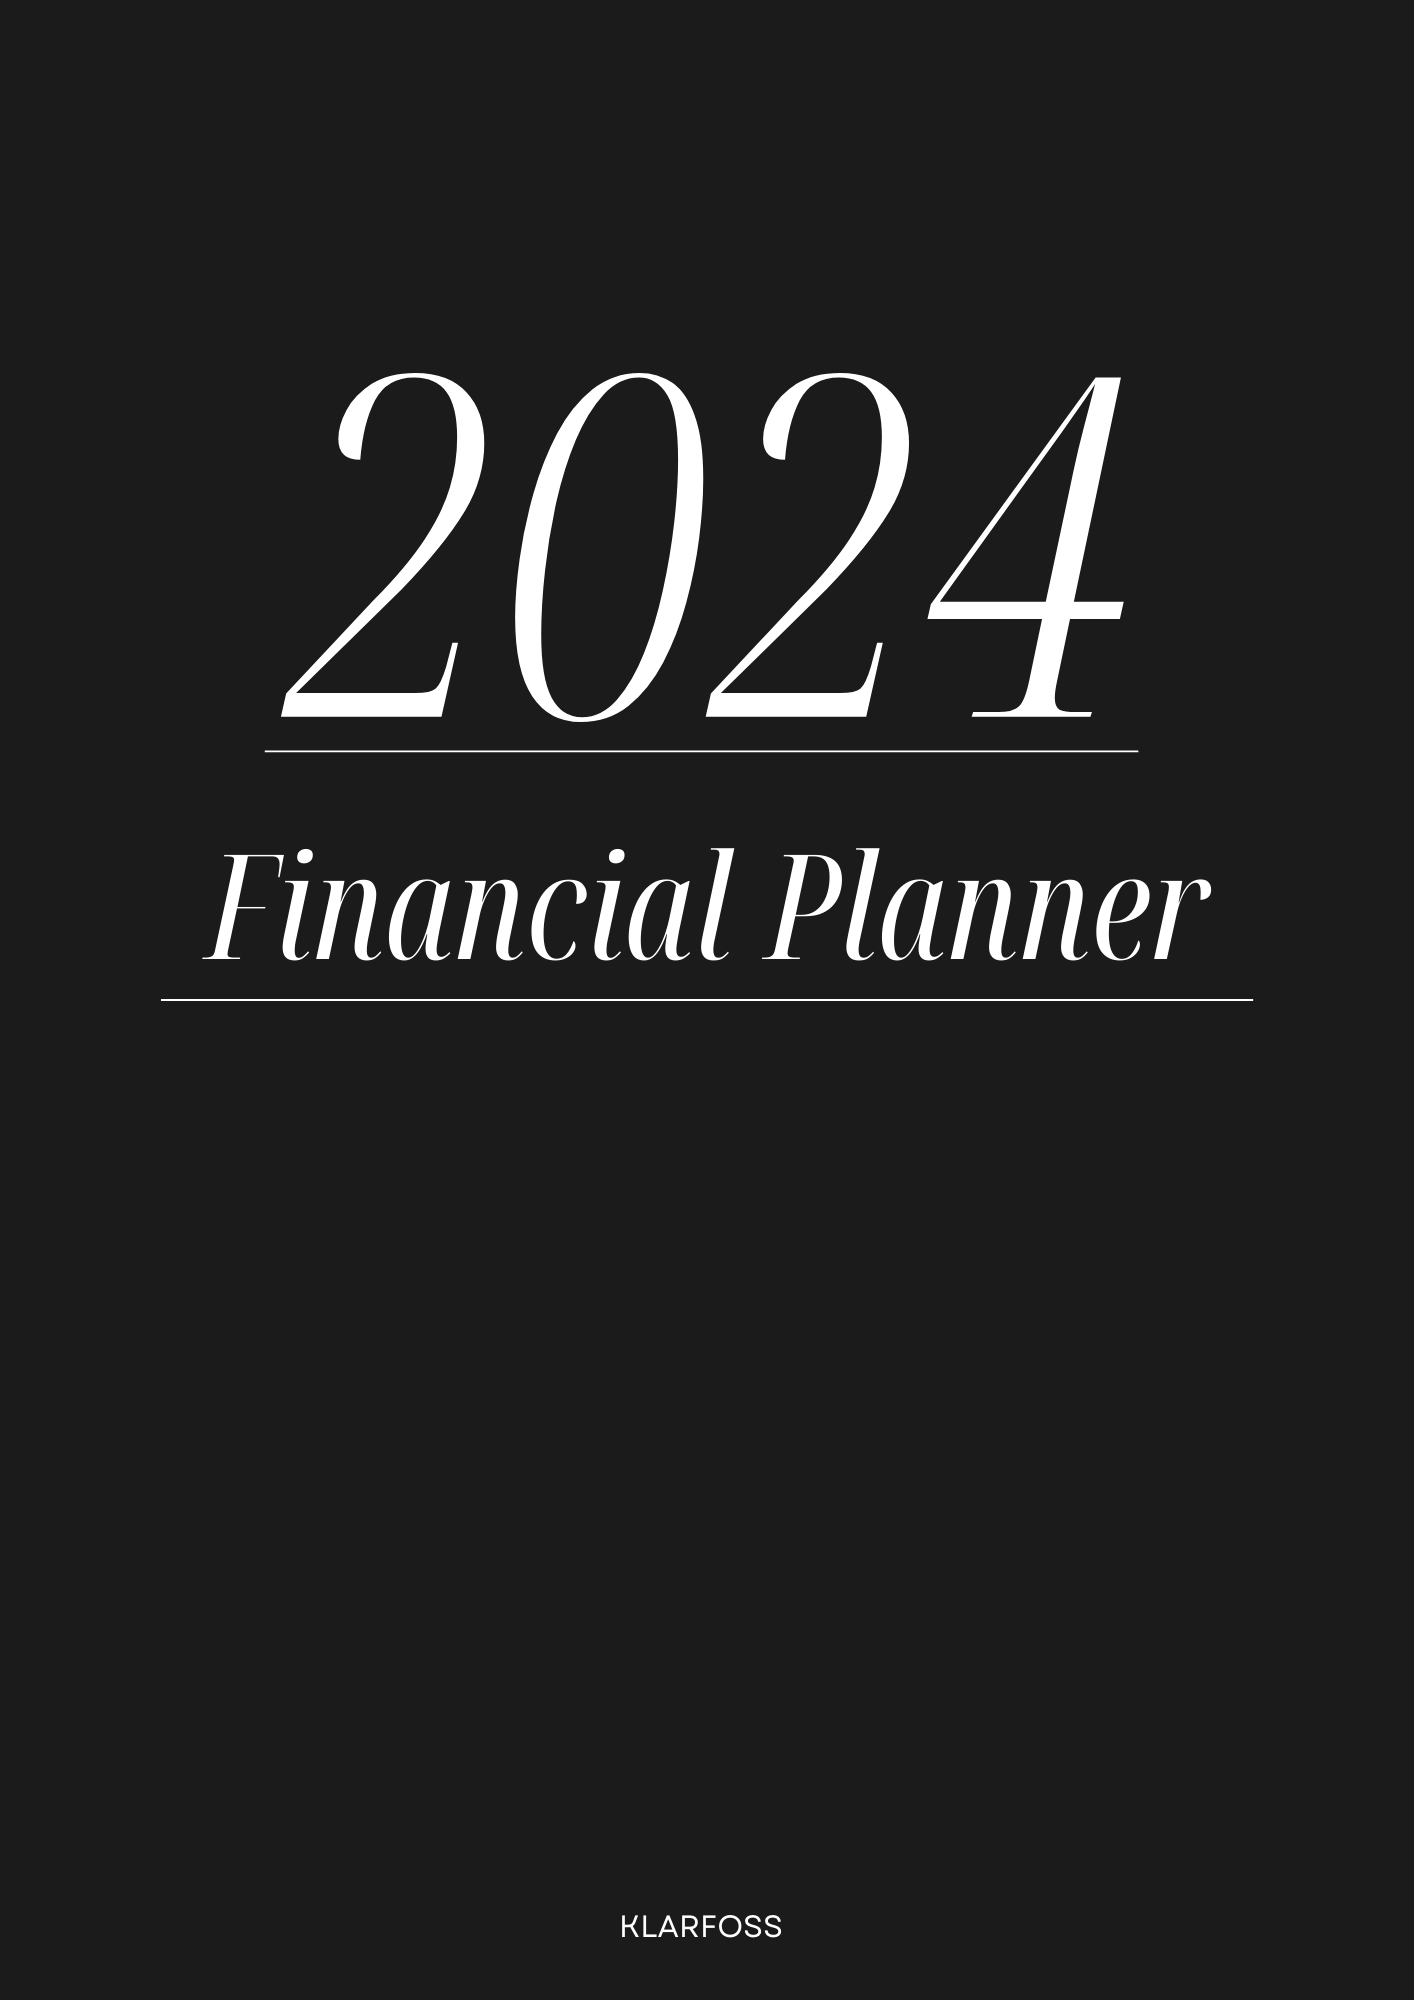 2024 FINANCIAL PLANNER